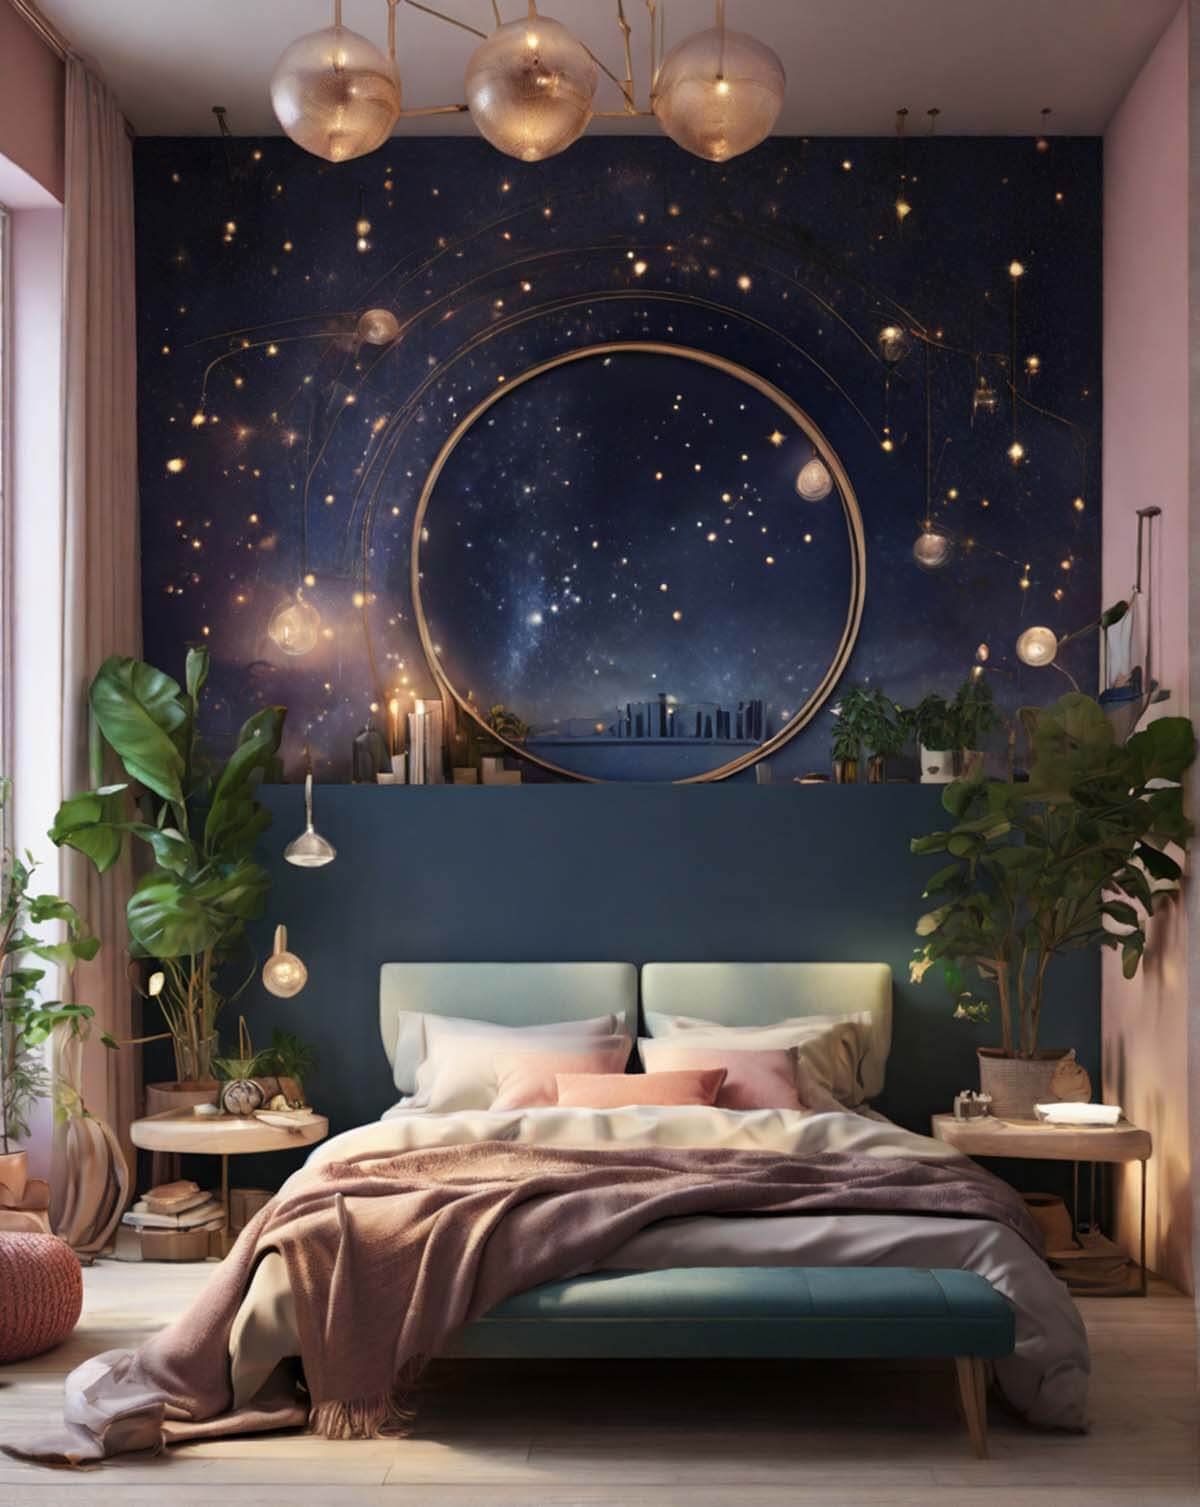 Zodiac signs bedroom decor ideas